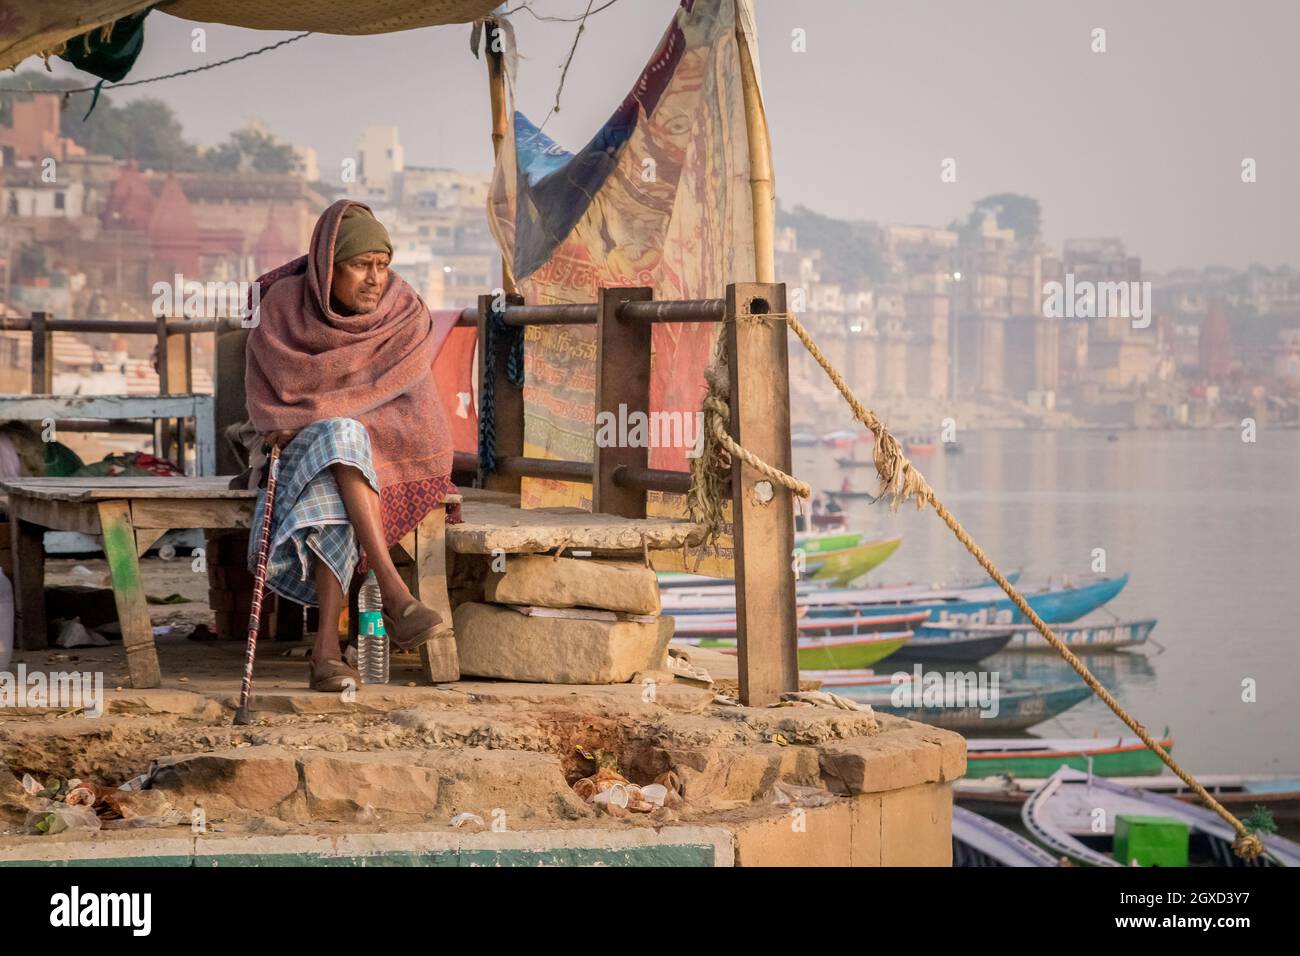 INDIA, VARANASI - NOVEMBER 27, 2015: Ethnic male sitting on wooden bench near boat on river embankment in India Stock Photo